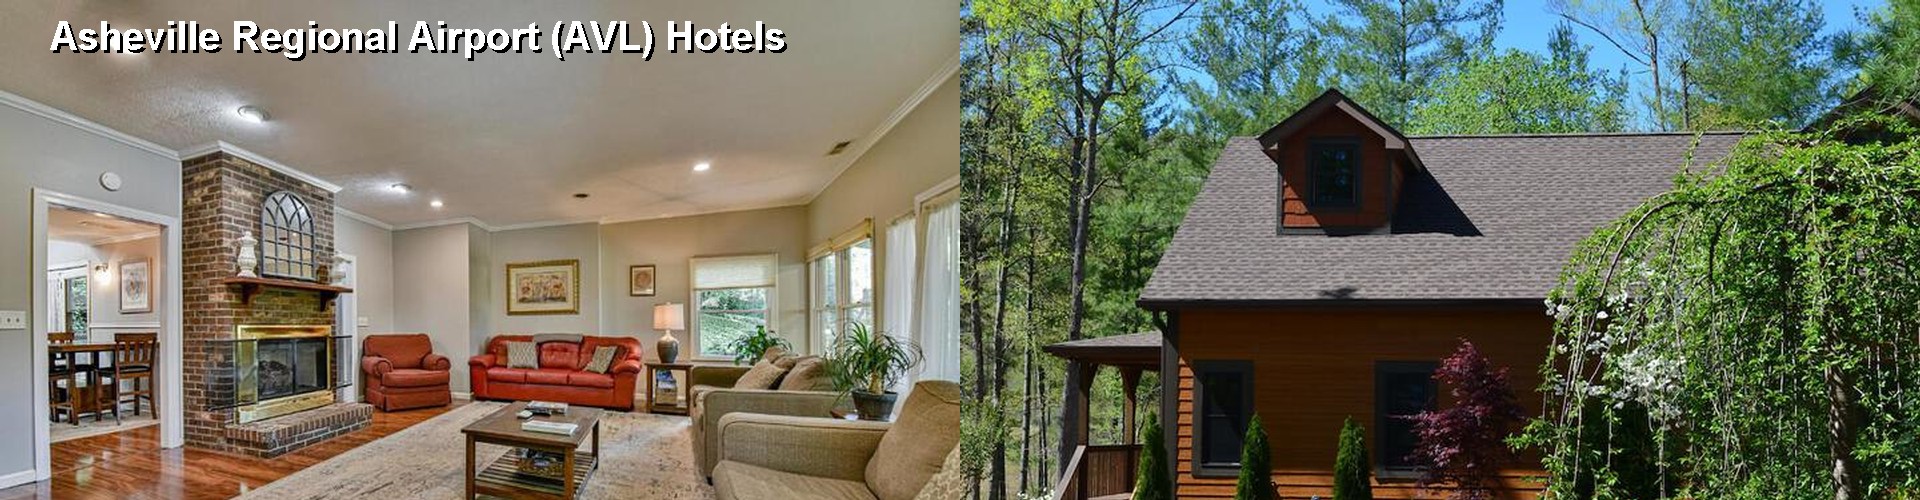 5 Best Hotels near Asheville Regional Airport (AVL)